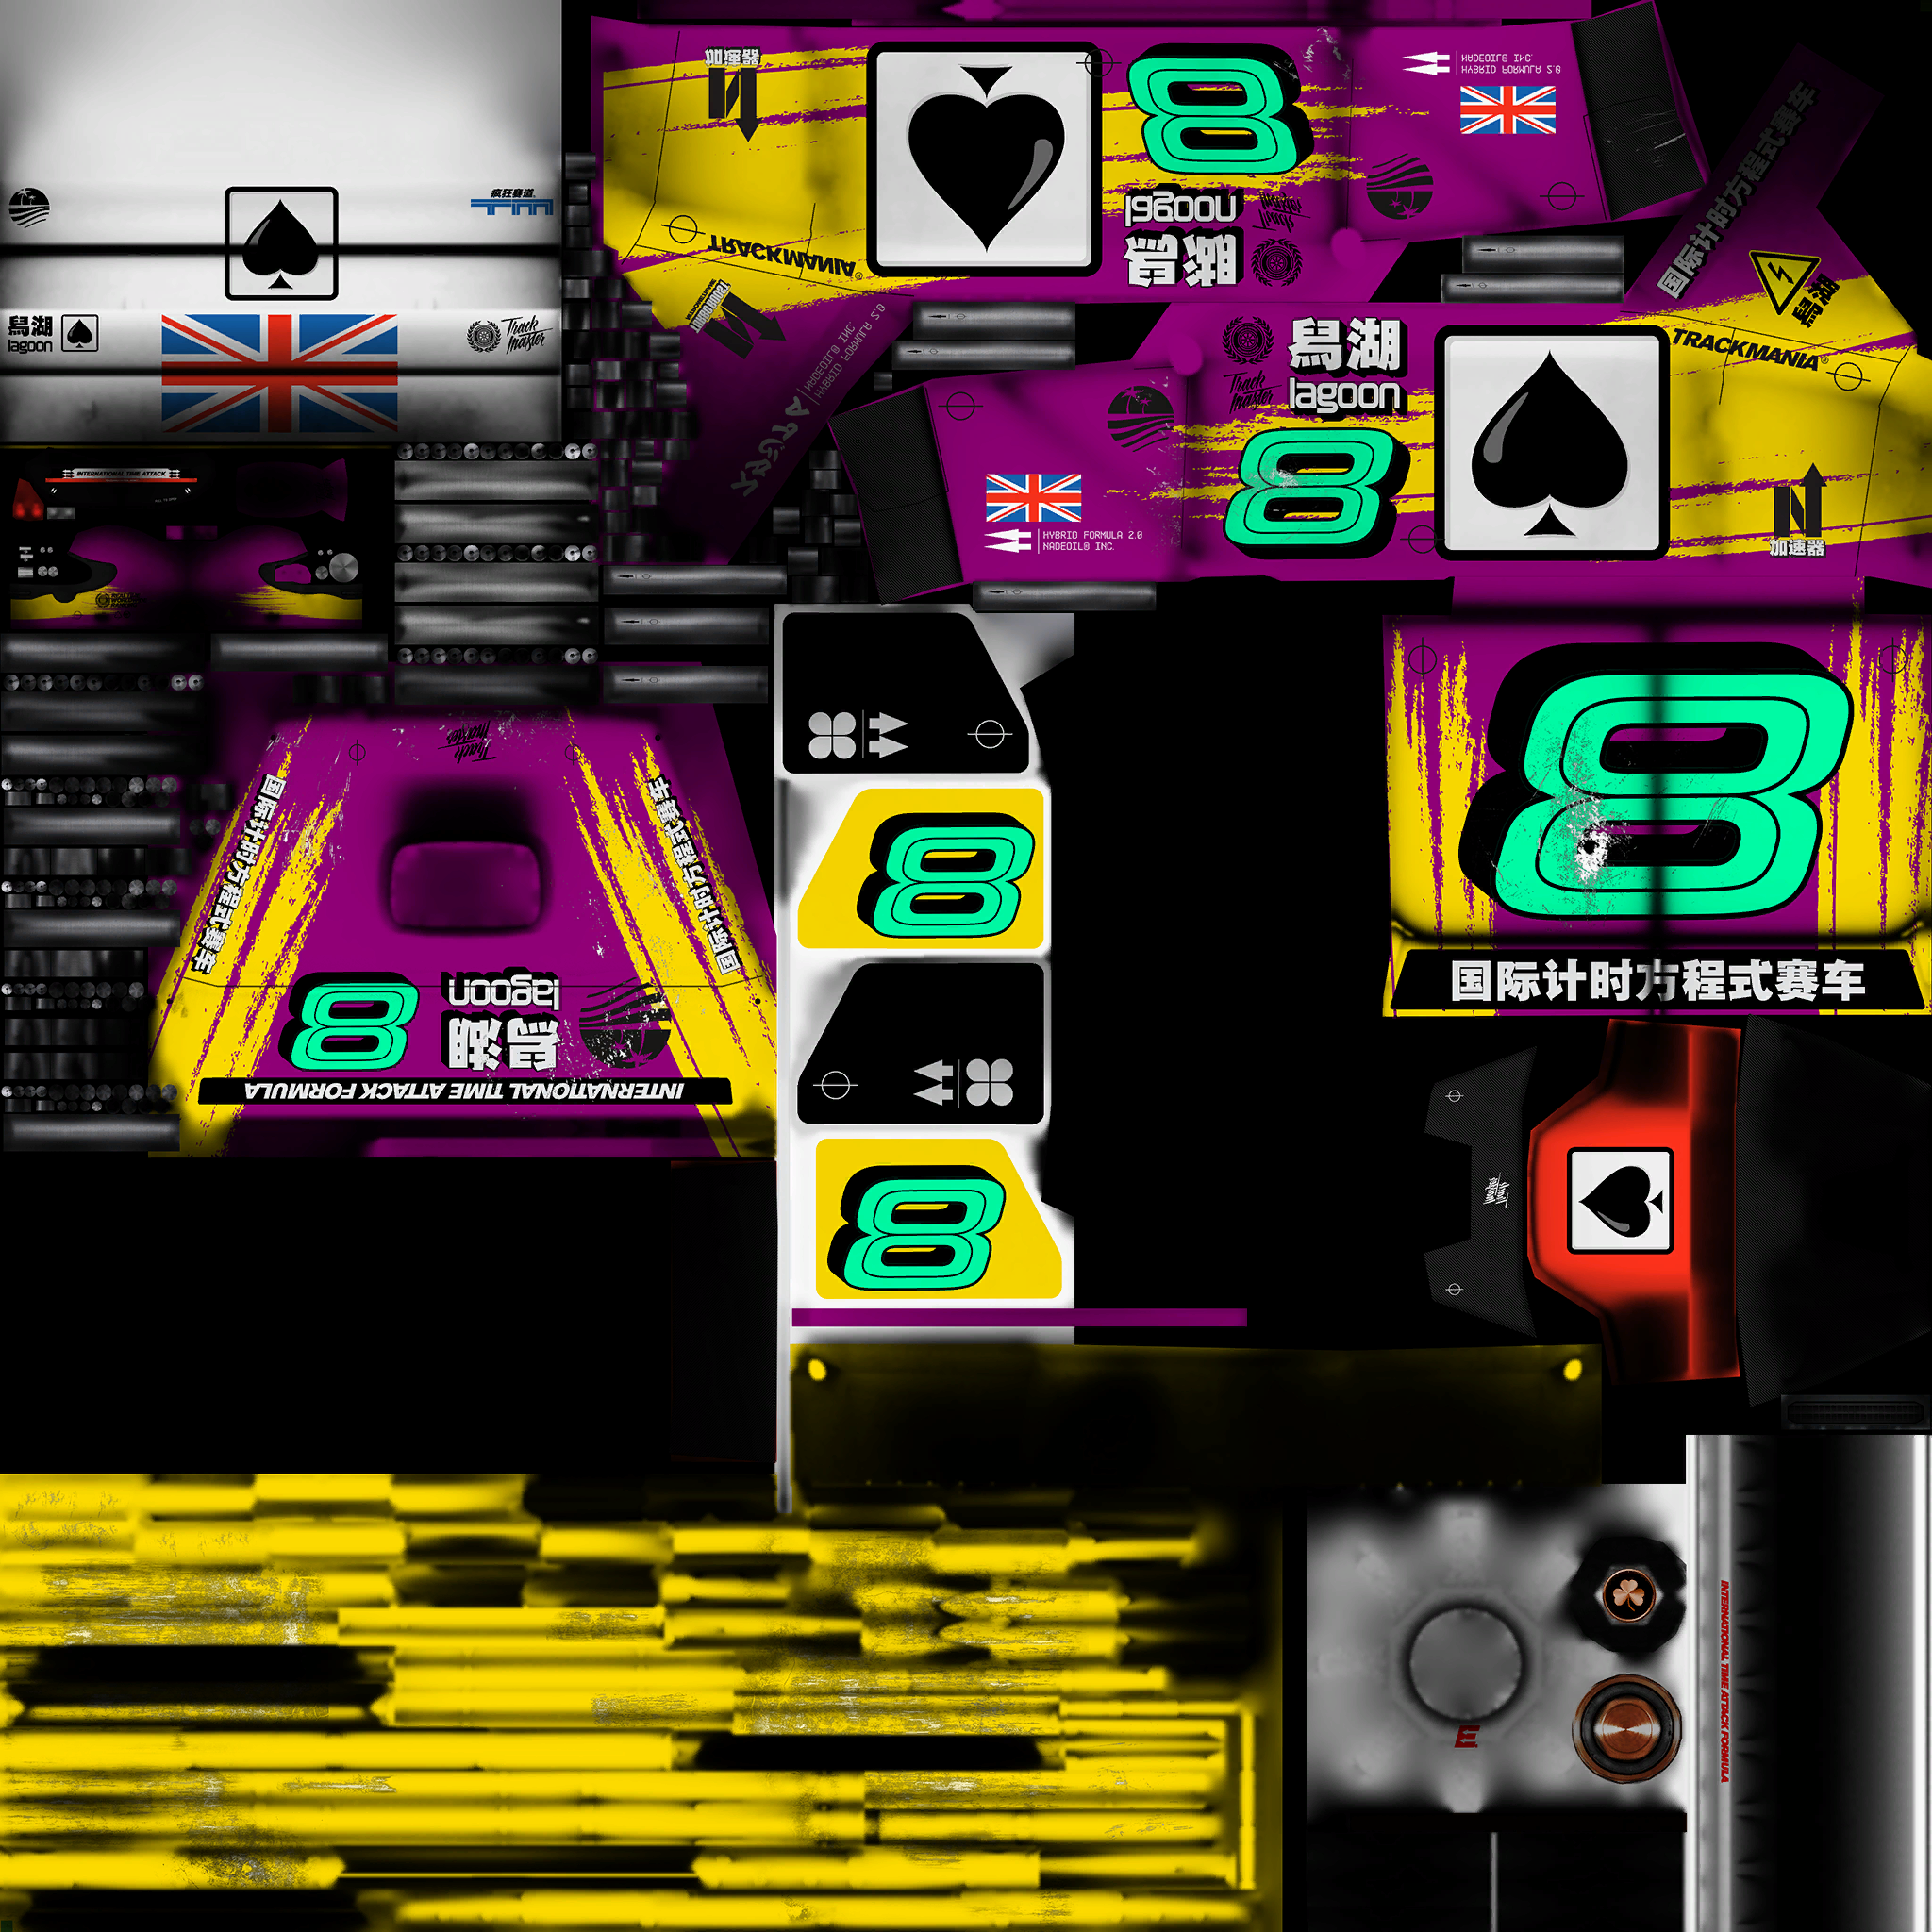 Arcade 5